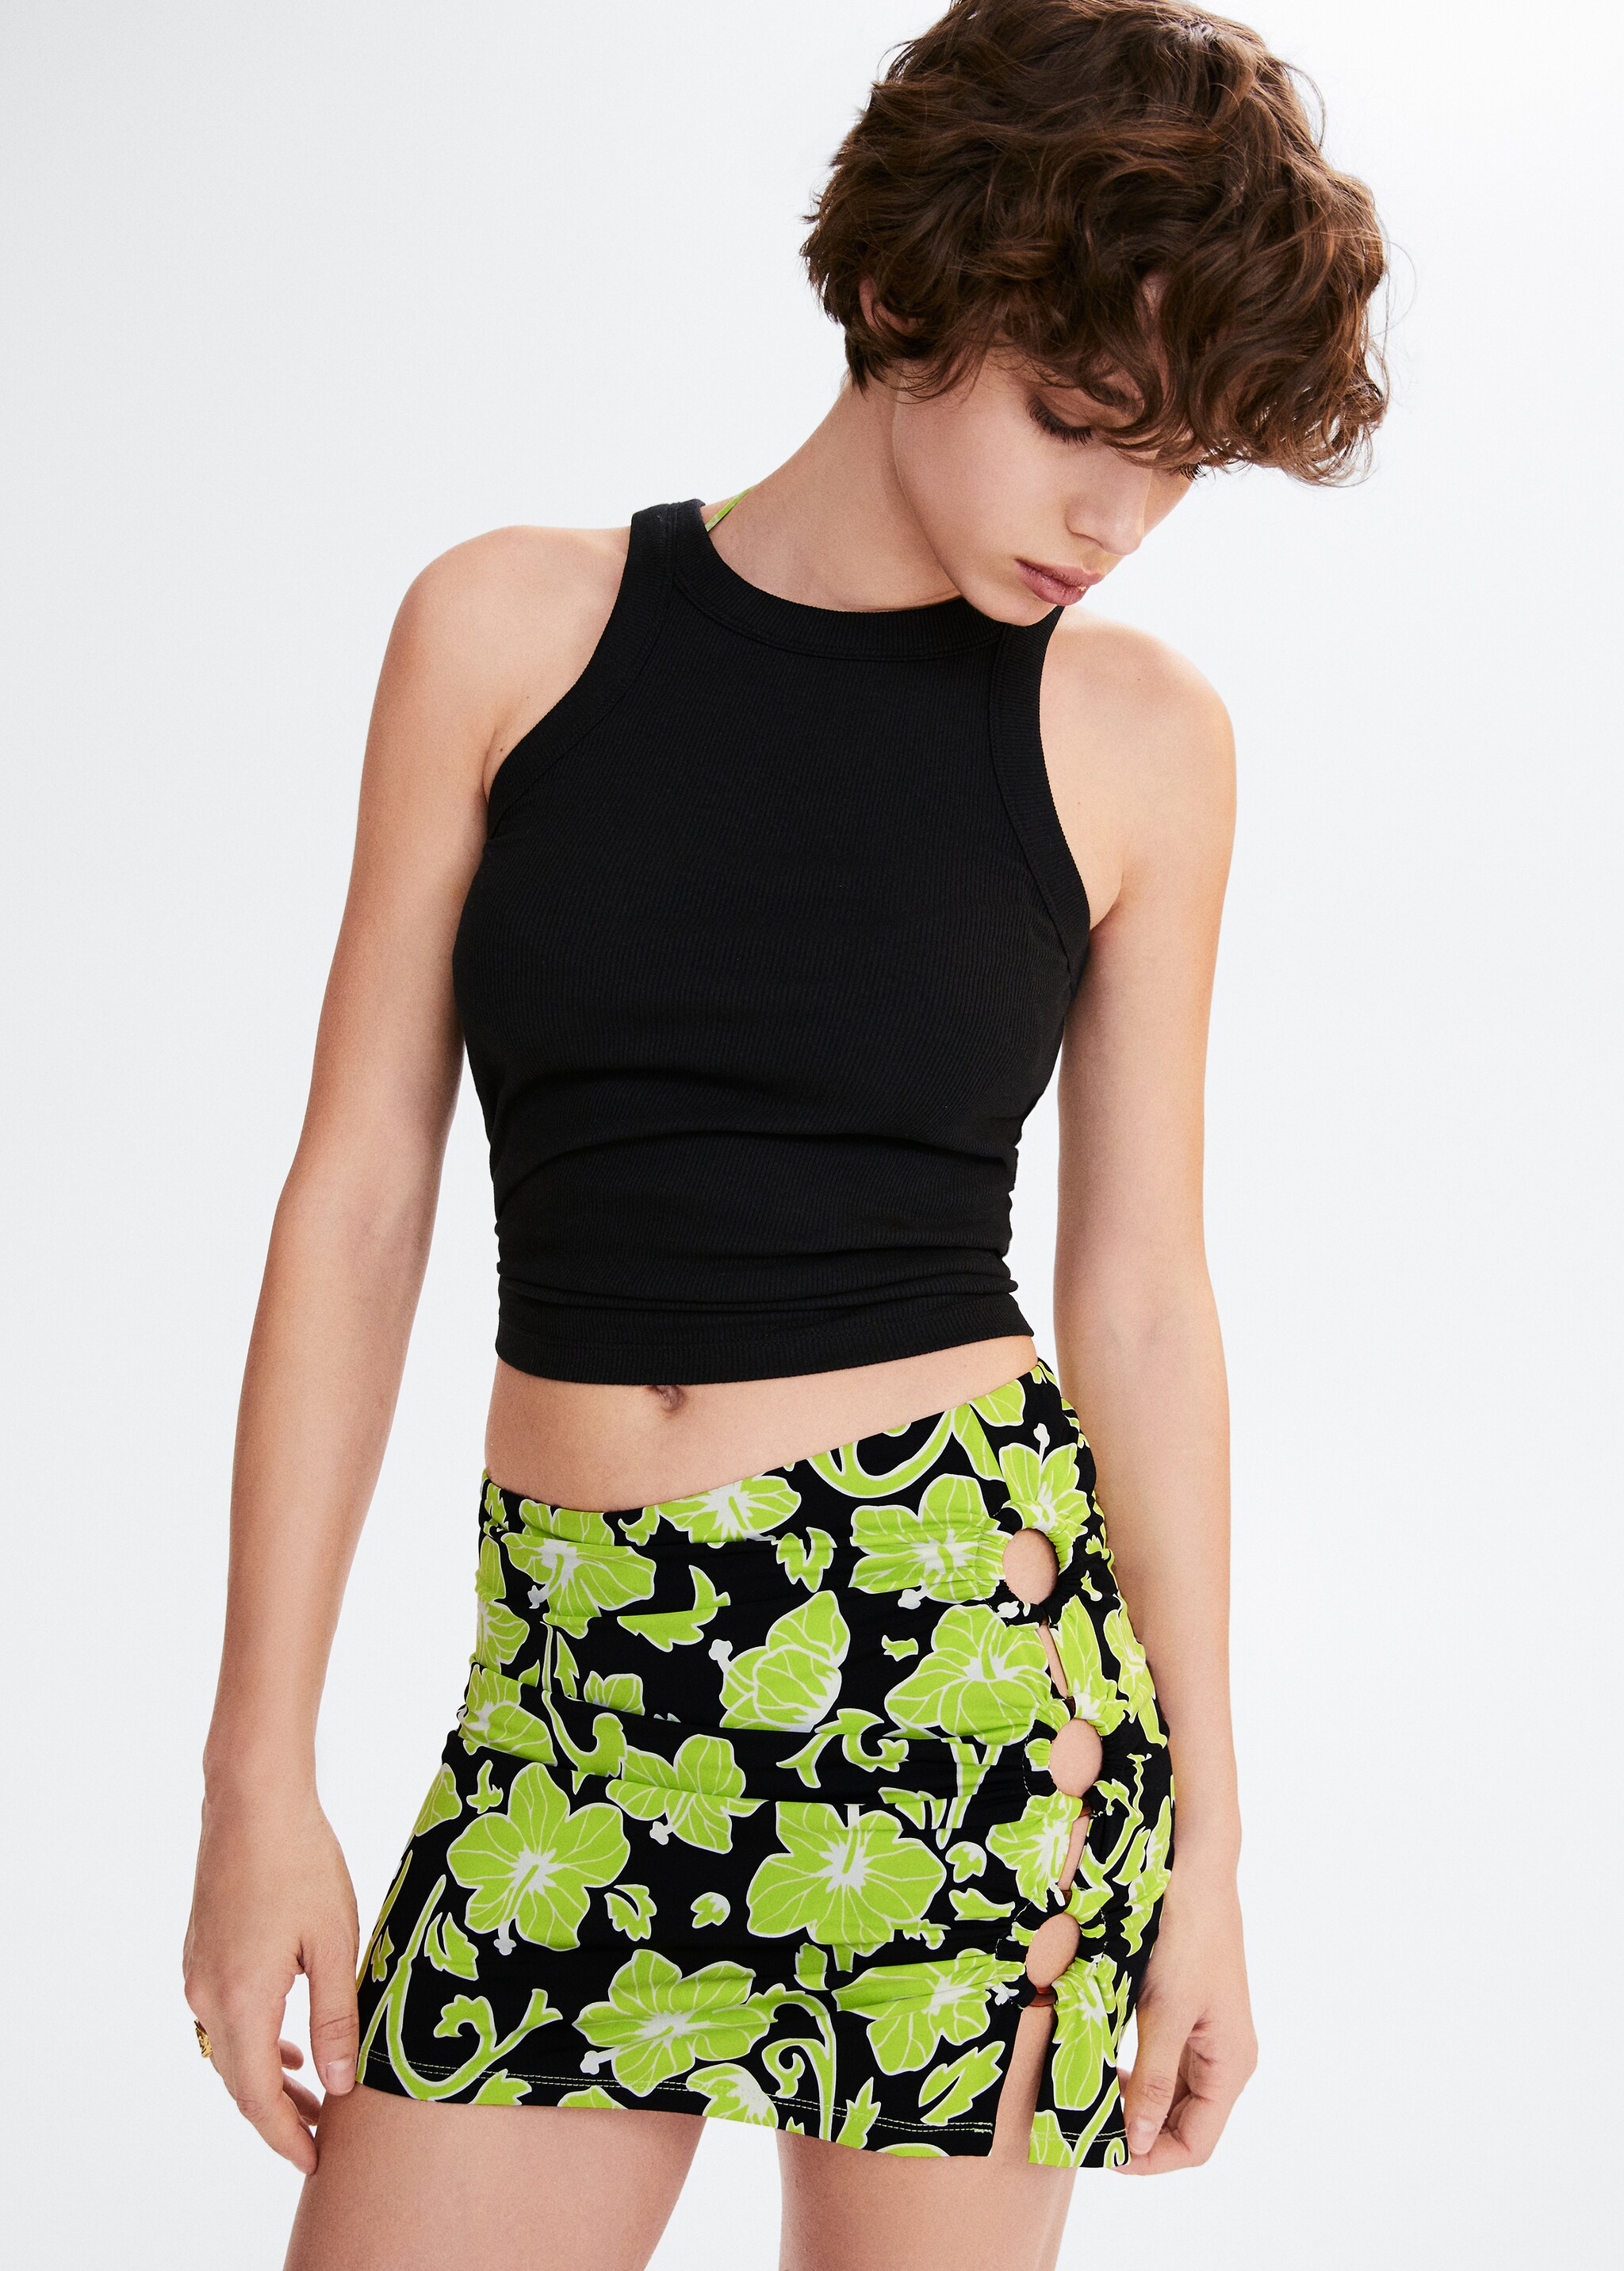 Floral print skirt - Medium plane